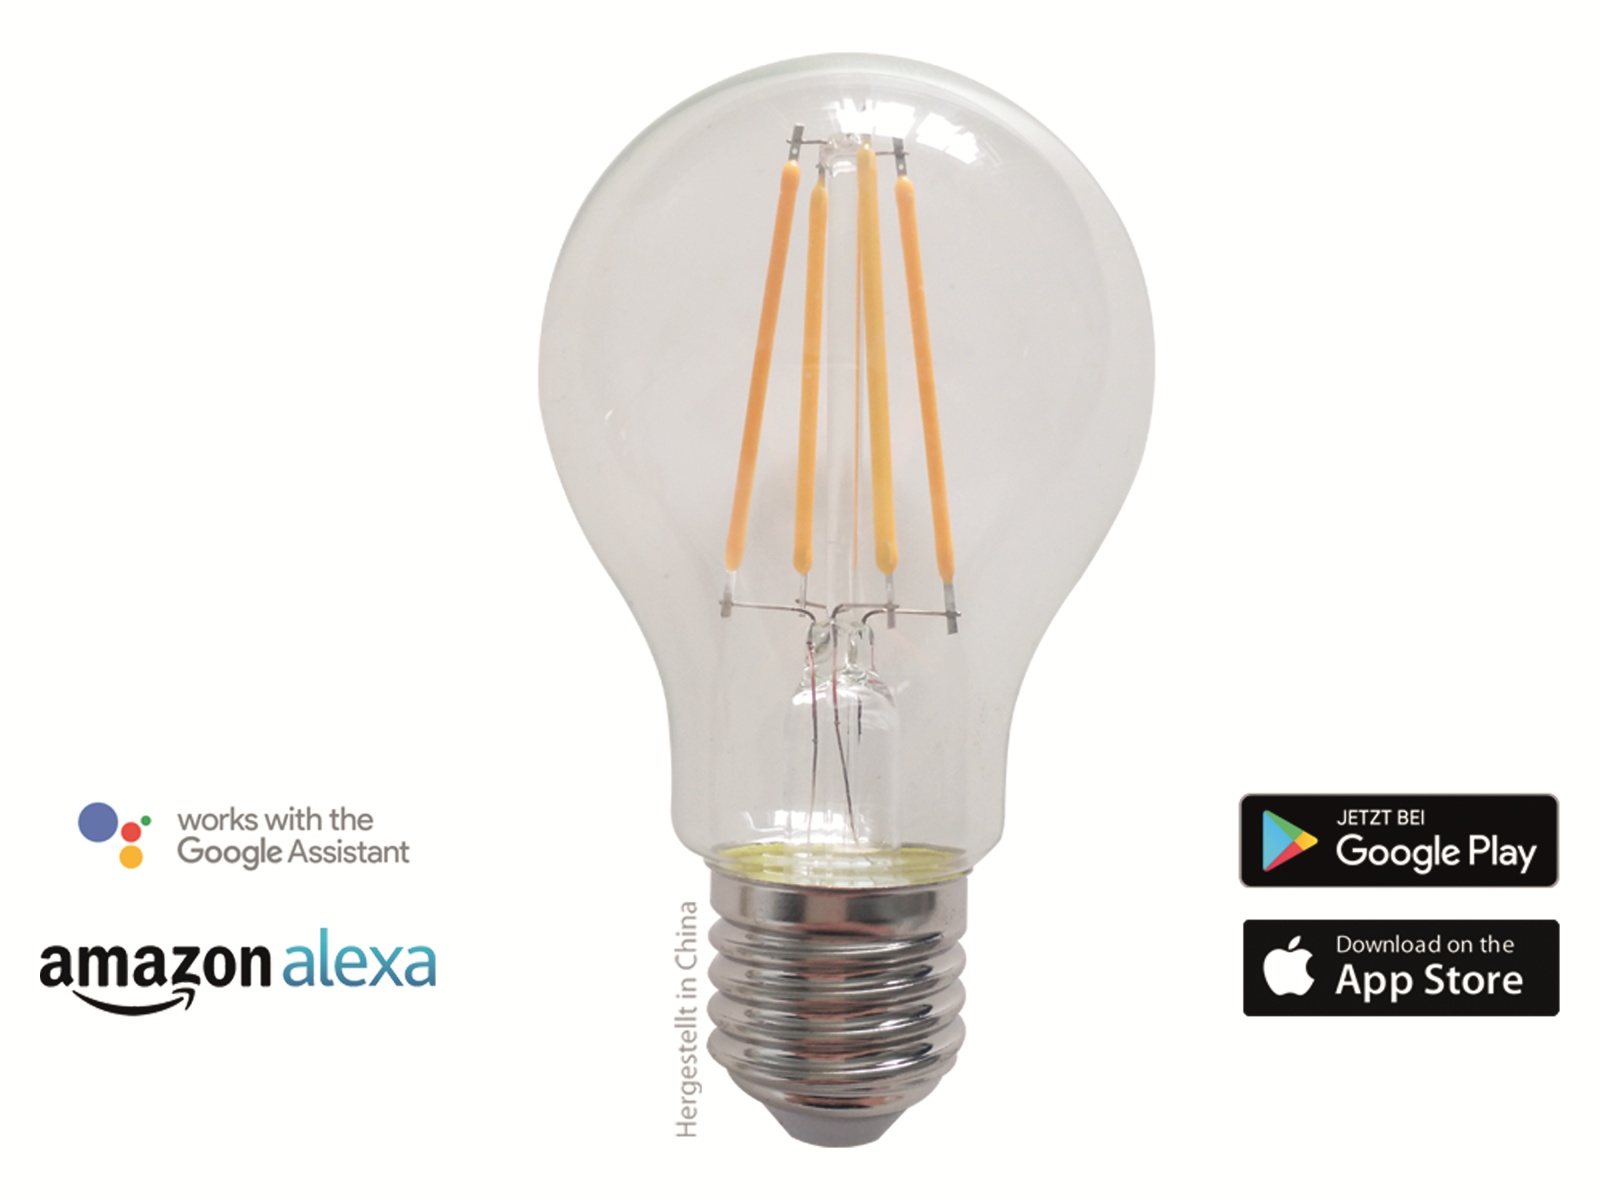 swisstone LED-Lampe SH 335, WLAN, E27, 7 W, EEK: A+, 800 lm, weiß, dimmbar